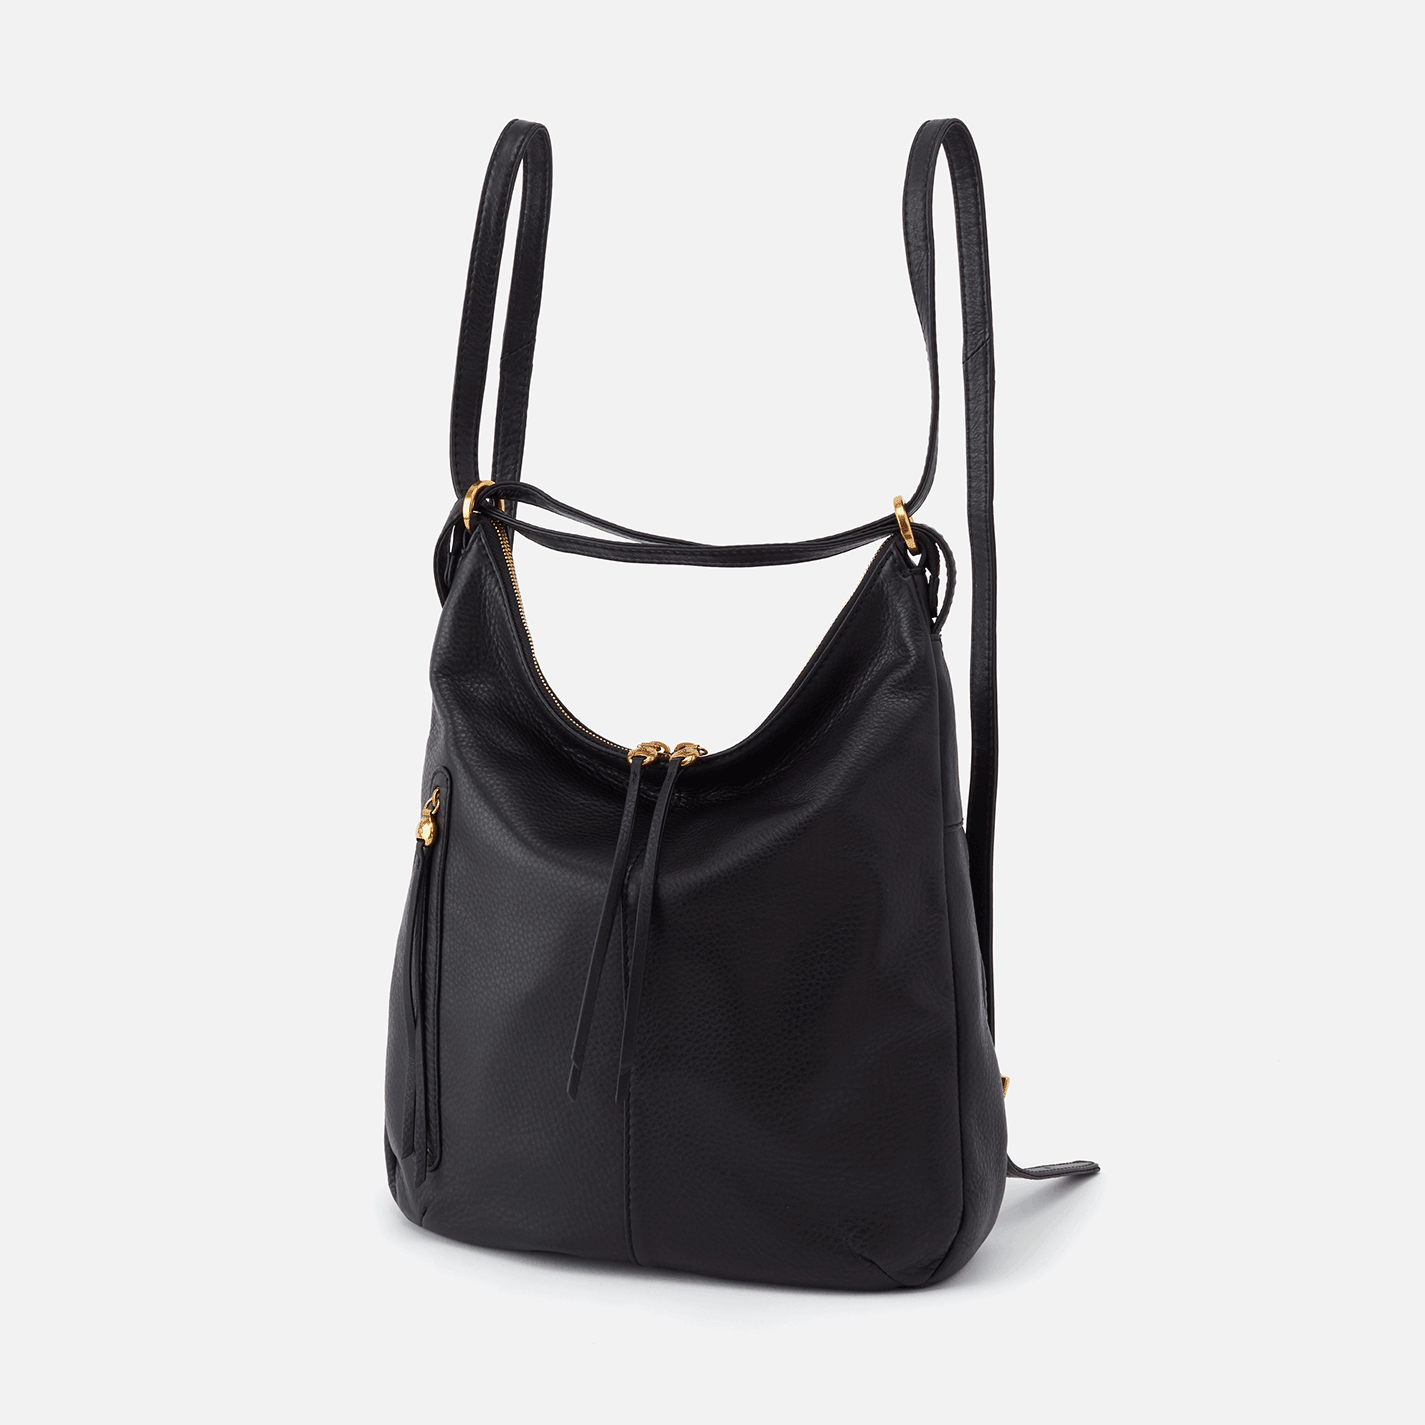 GetUSCart- SHANGRI-LA Purse Handbag for Women Canvas Tote Hobo Bag Casual  Shoulder School Bag Rucksack Convertible Backpack - Black